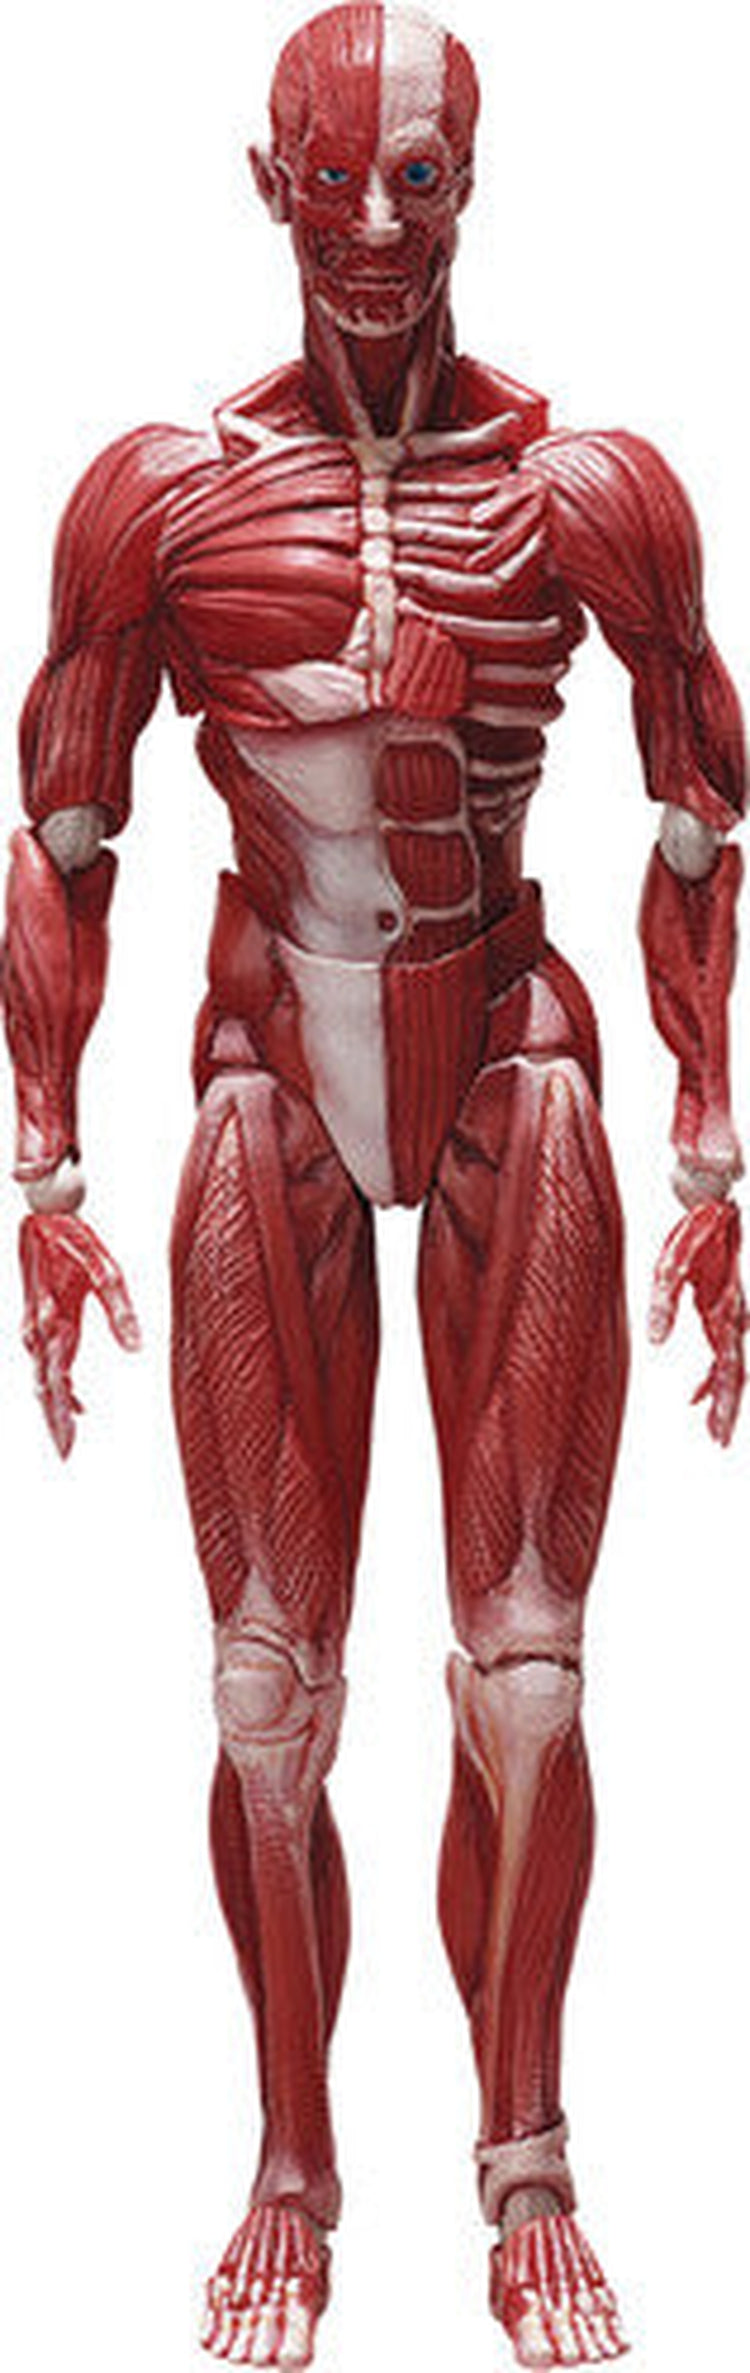 Good Smile Company - Human Anatomical Model Figma Action Figure